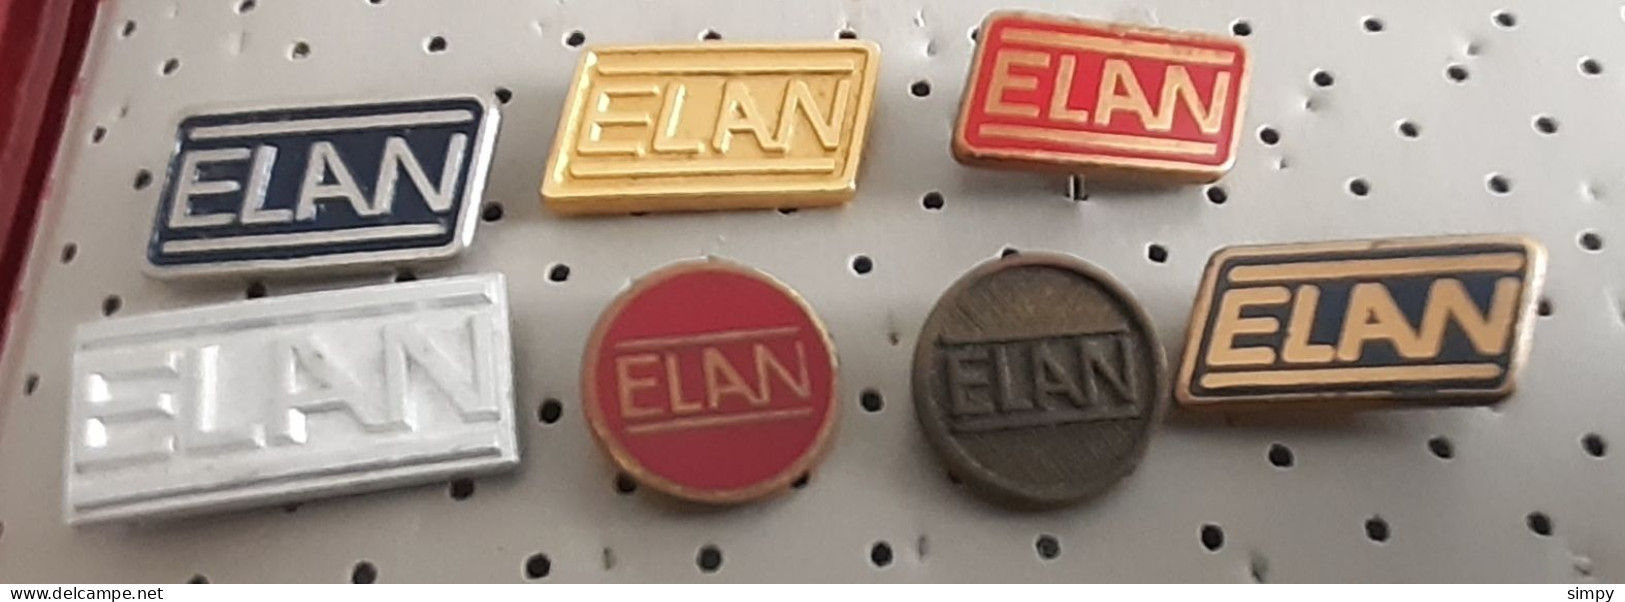 ELAN Begunje Factory For Skis, Bicycles, Boats, Skiing Slovenia Ex Yugoslavia Pins - Markennamen